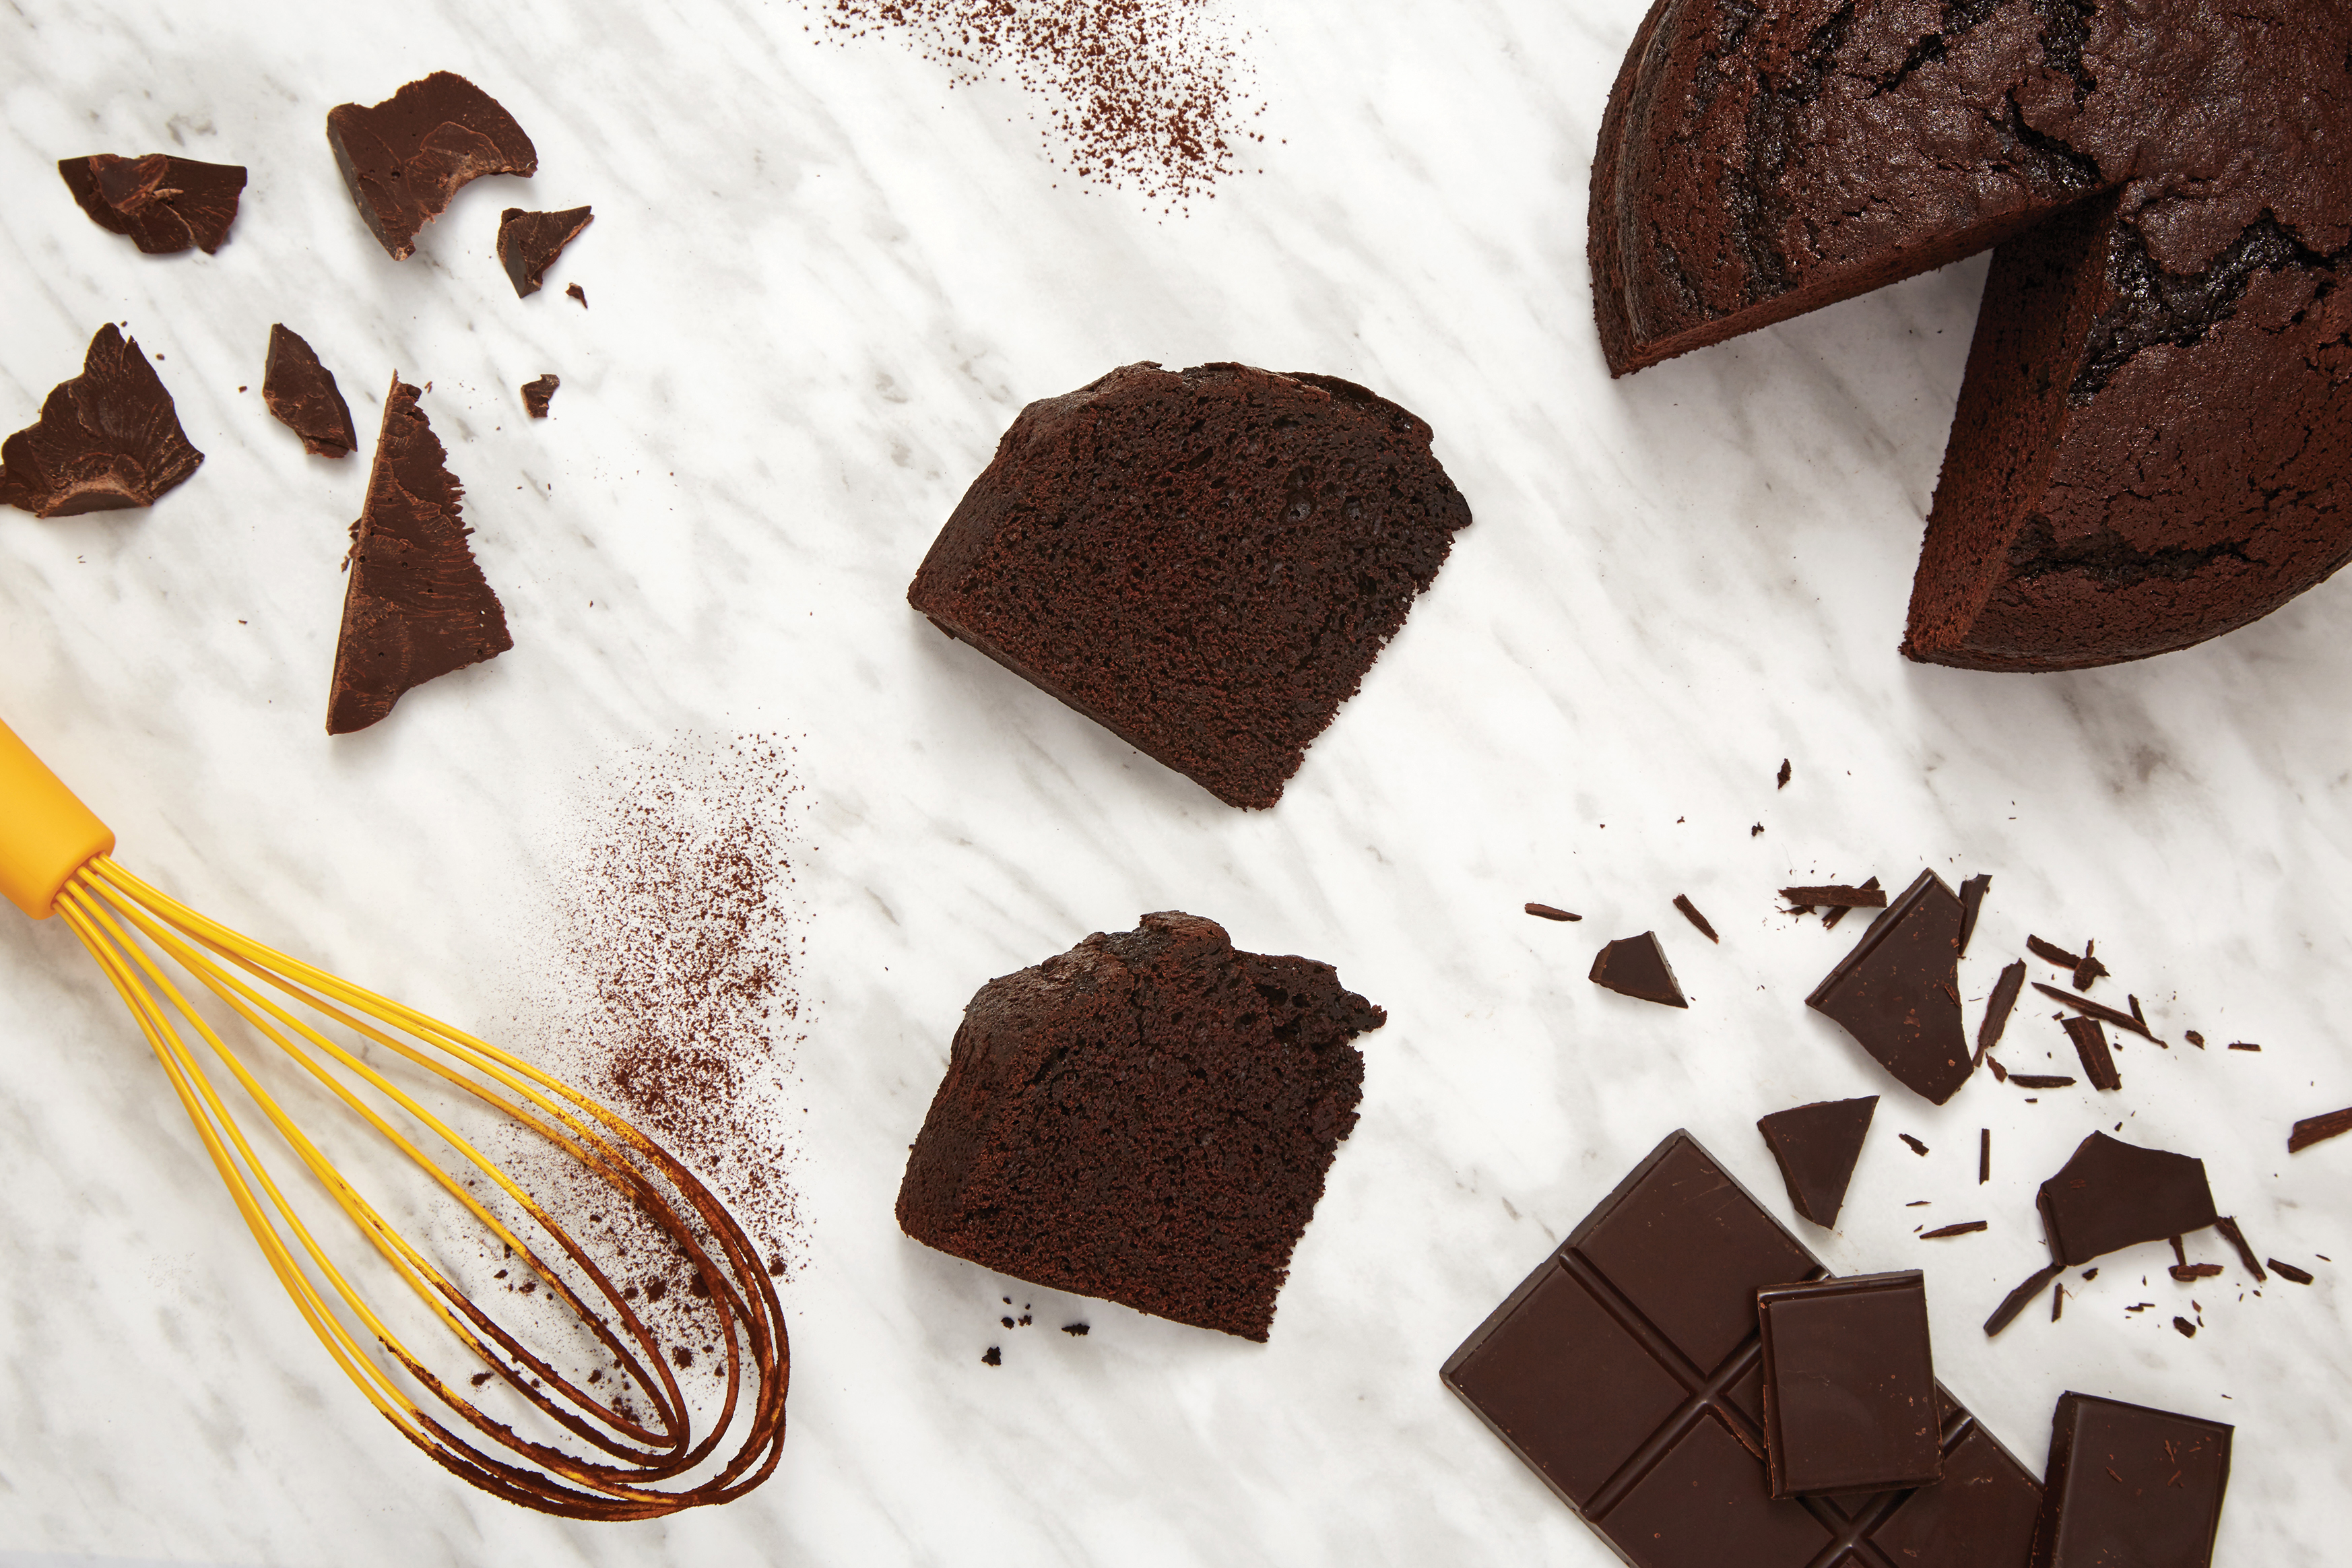 चॉकलेट केक रेसिपी: (Simple Steps to Make Chocolate Cake At Home)